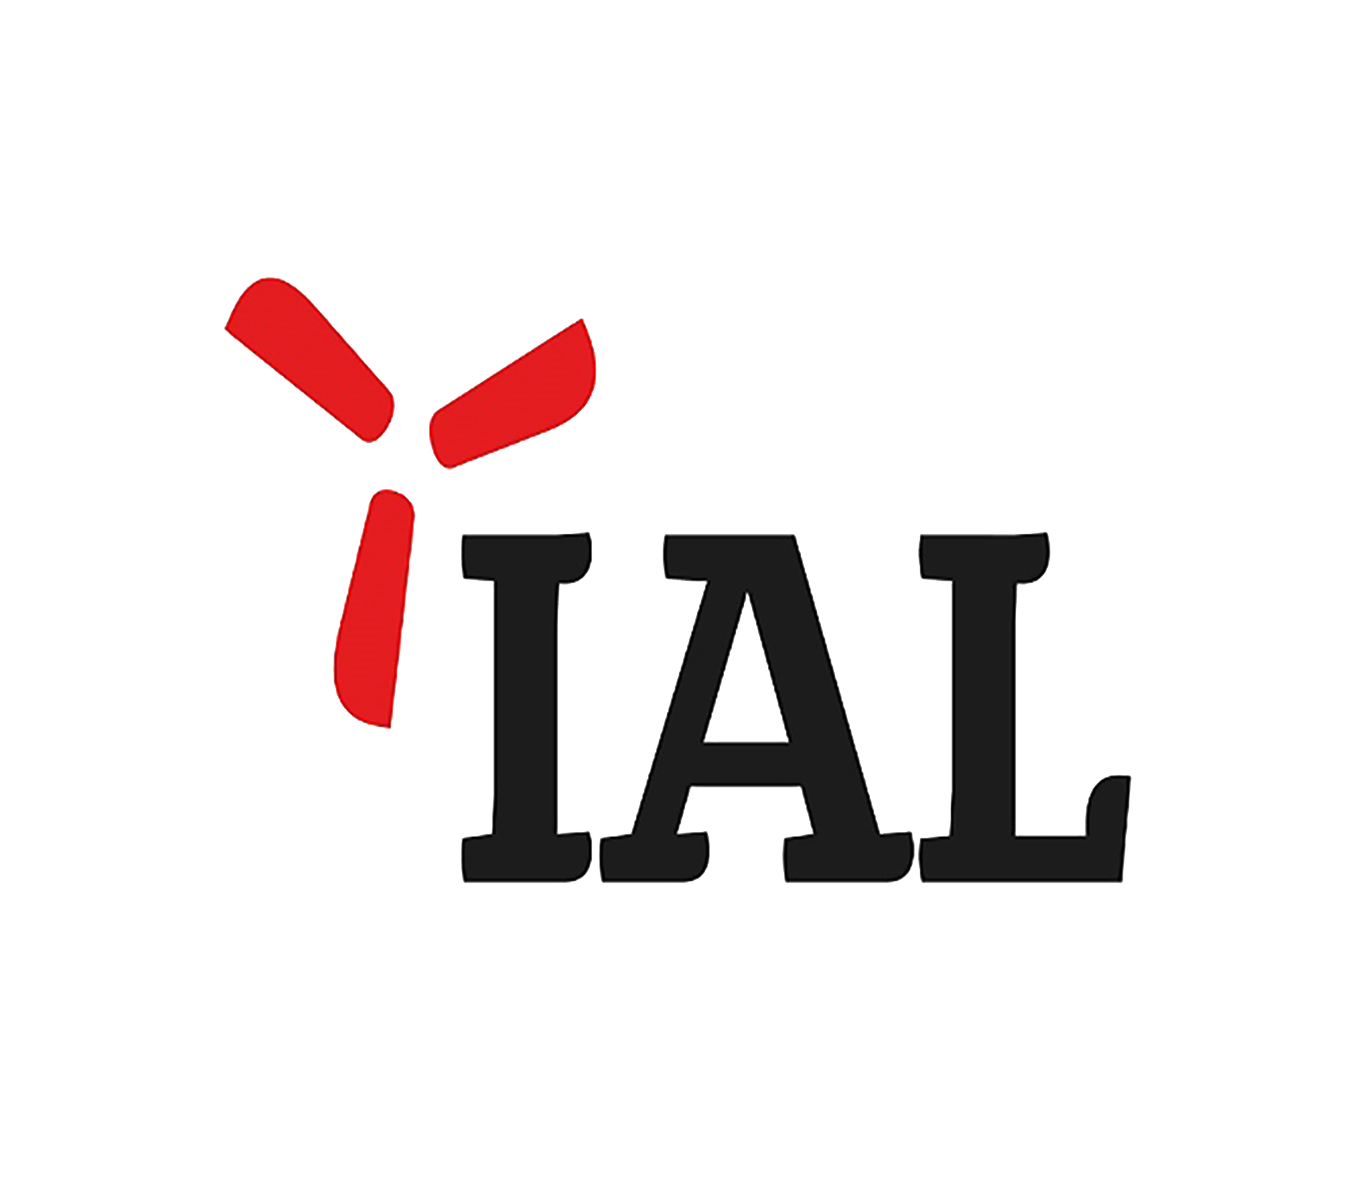 IAL Insurance